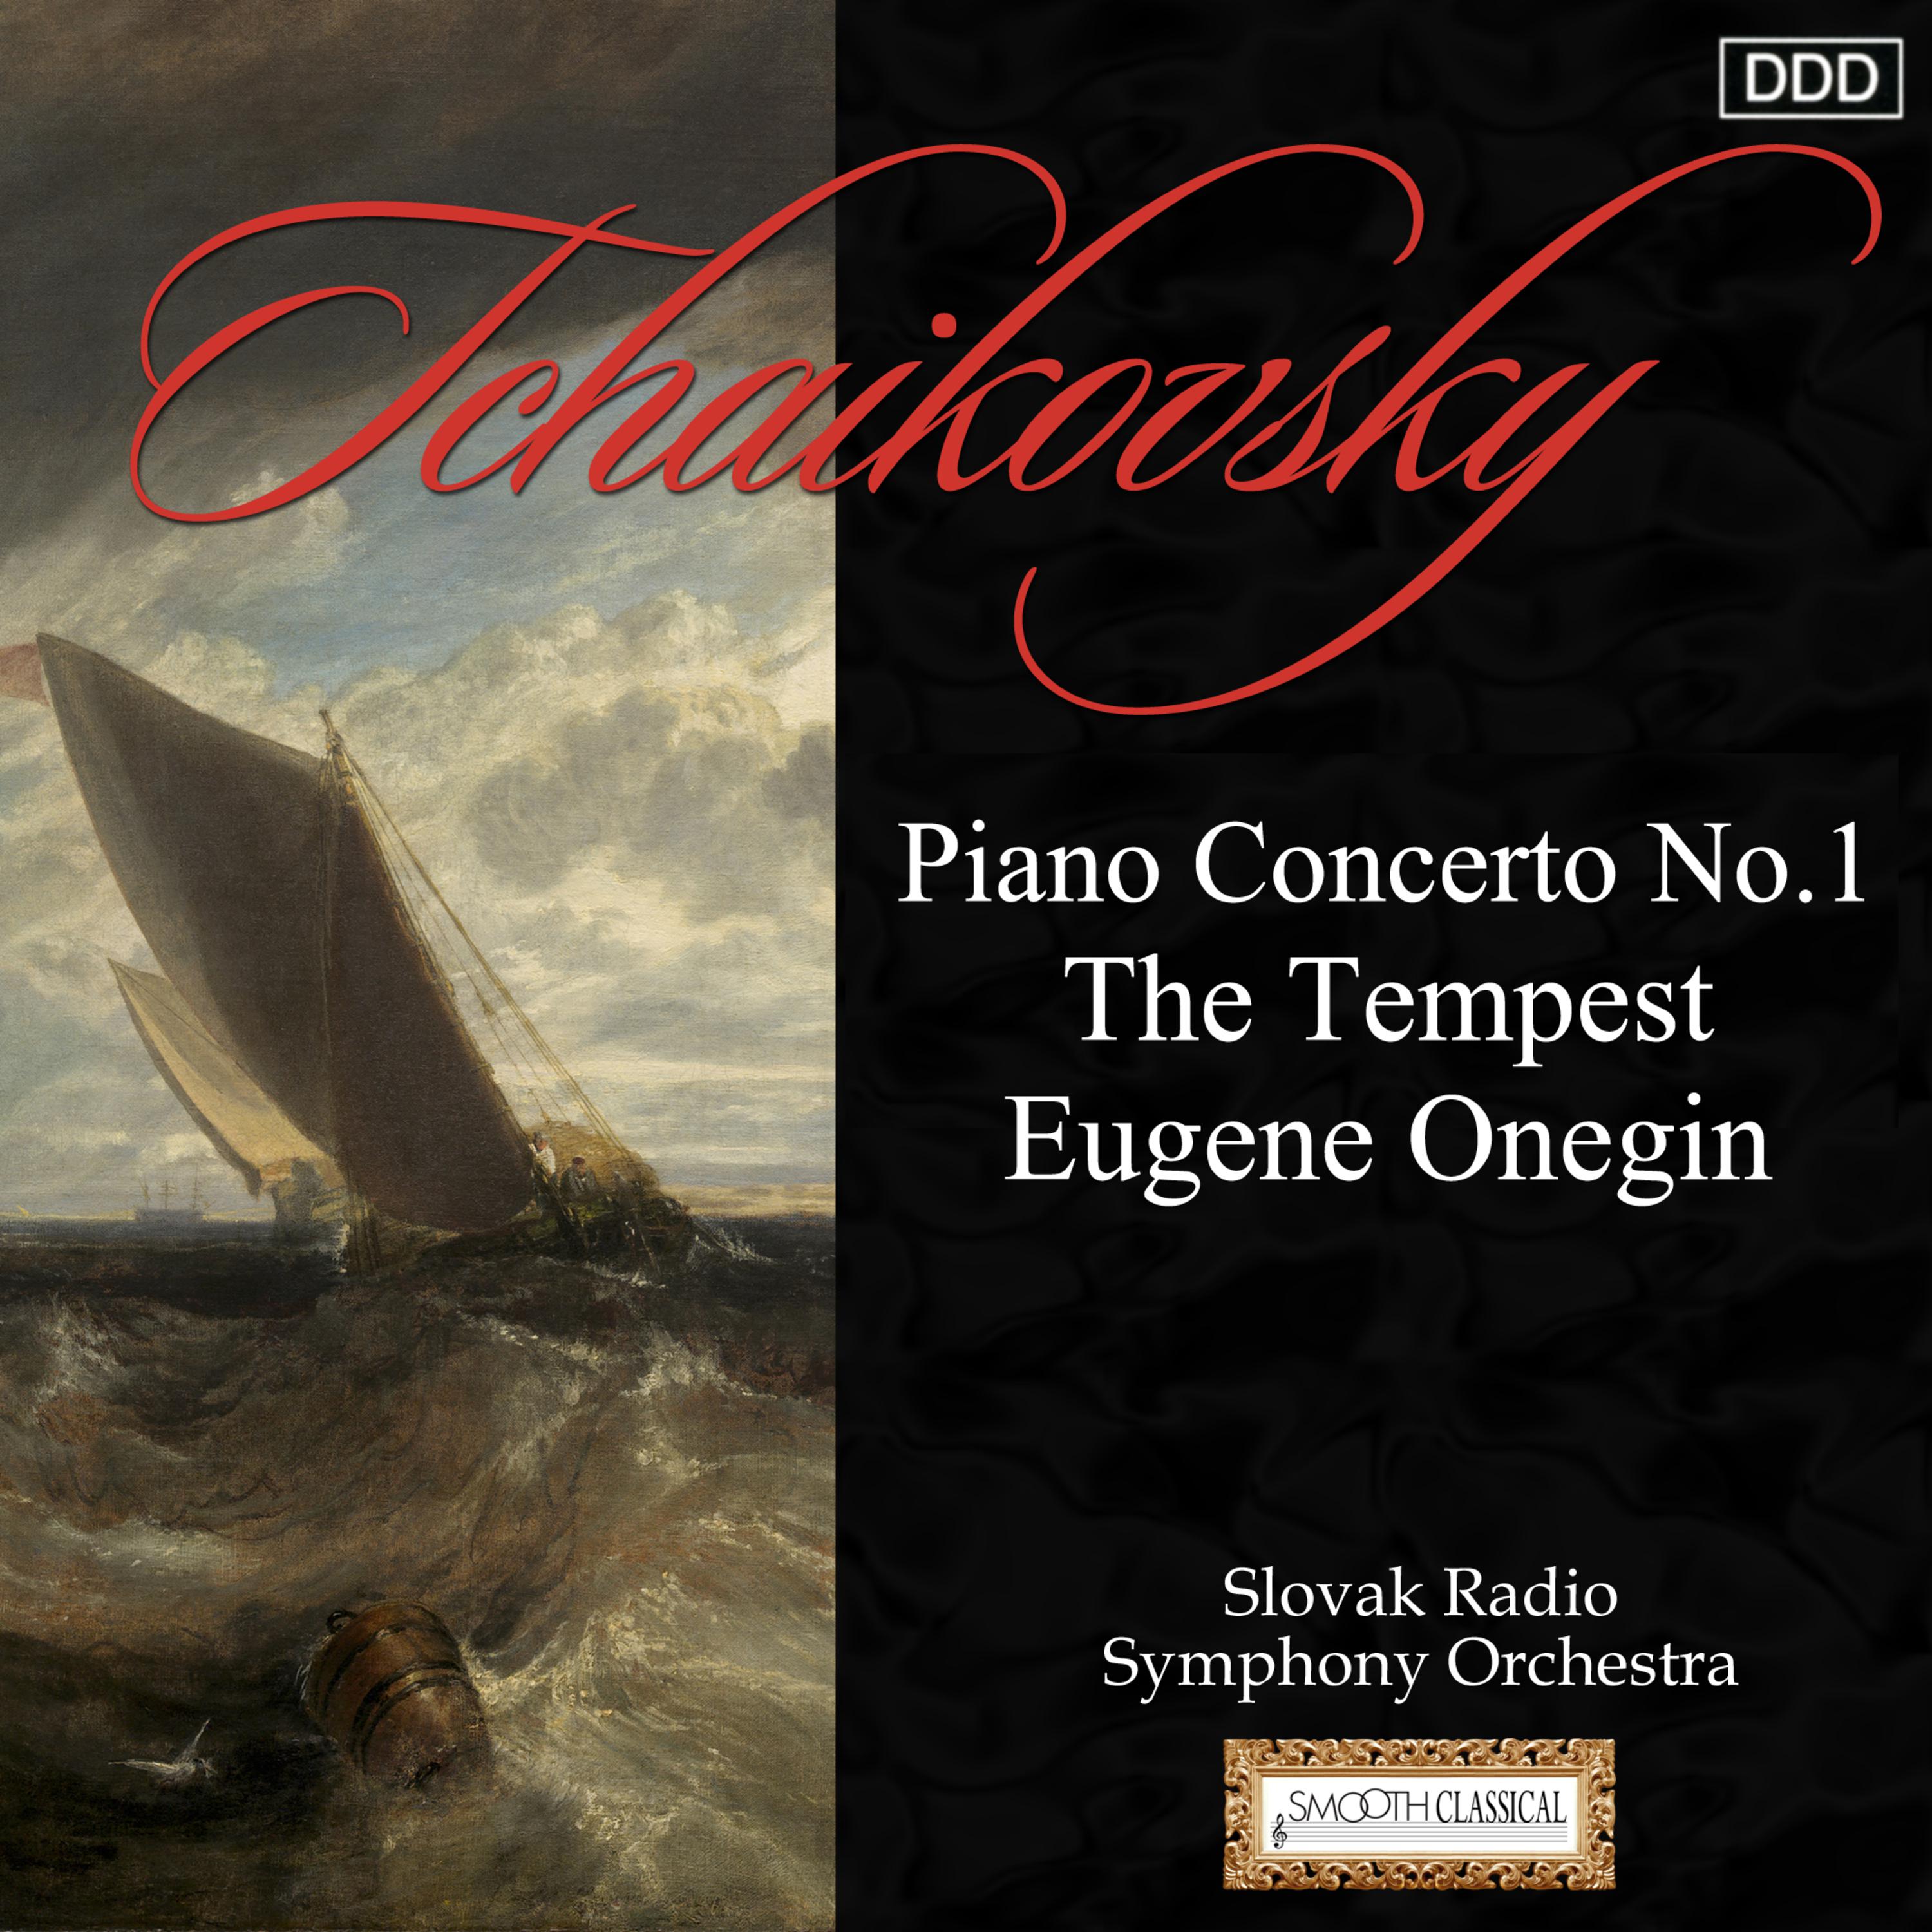 Tchaikovsky: Piano Concerto No. 1 - The Tempest - Eugene Onegin